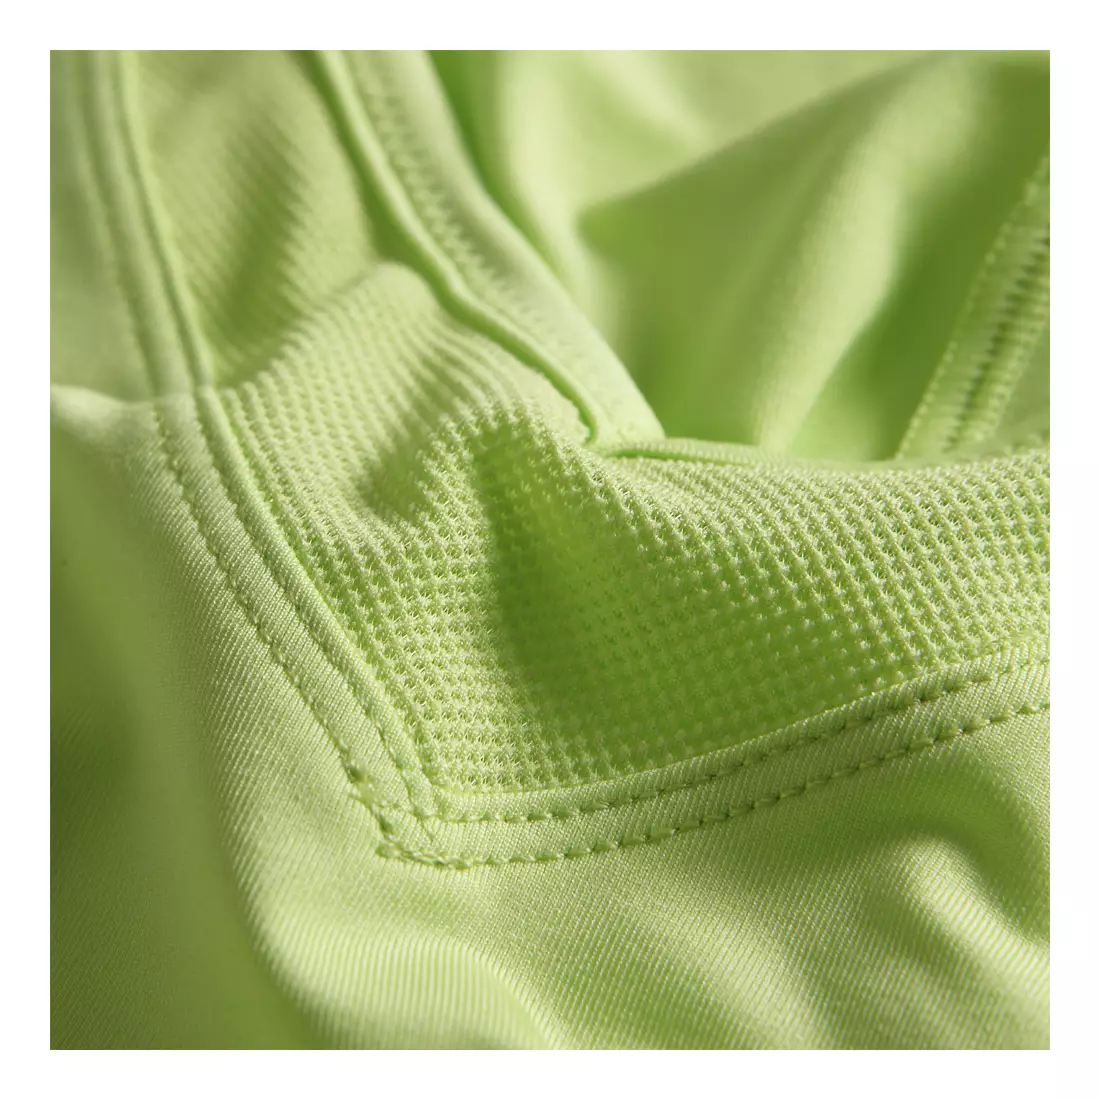 ASICS 110590-0423 PERFORMANCE TEE – Damen-Lauf-T-Shirt, Farbe: Grün